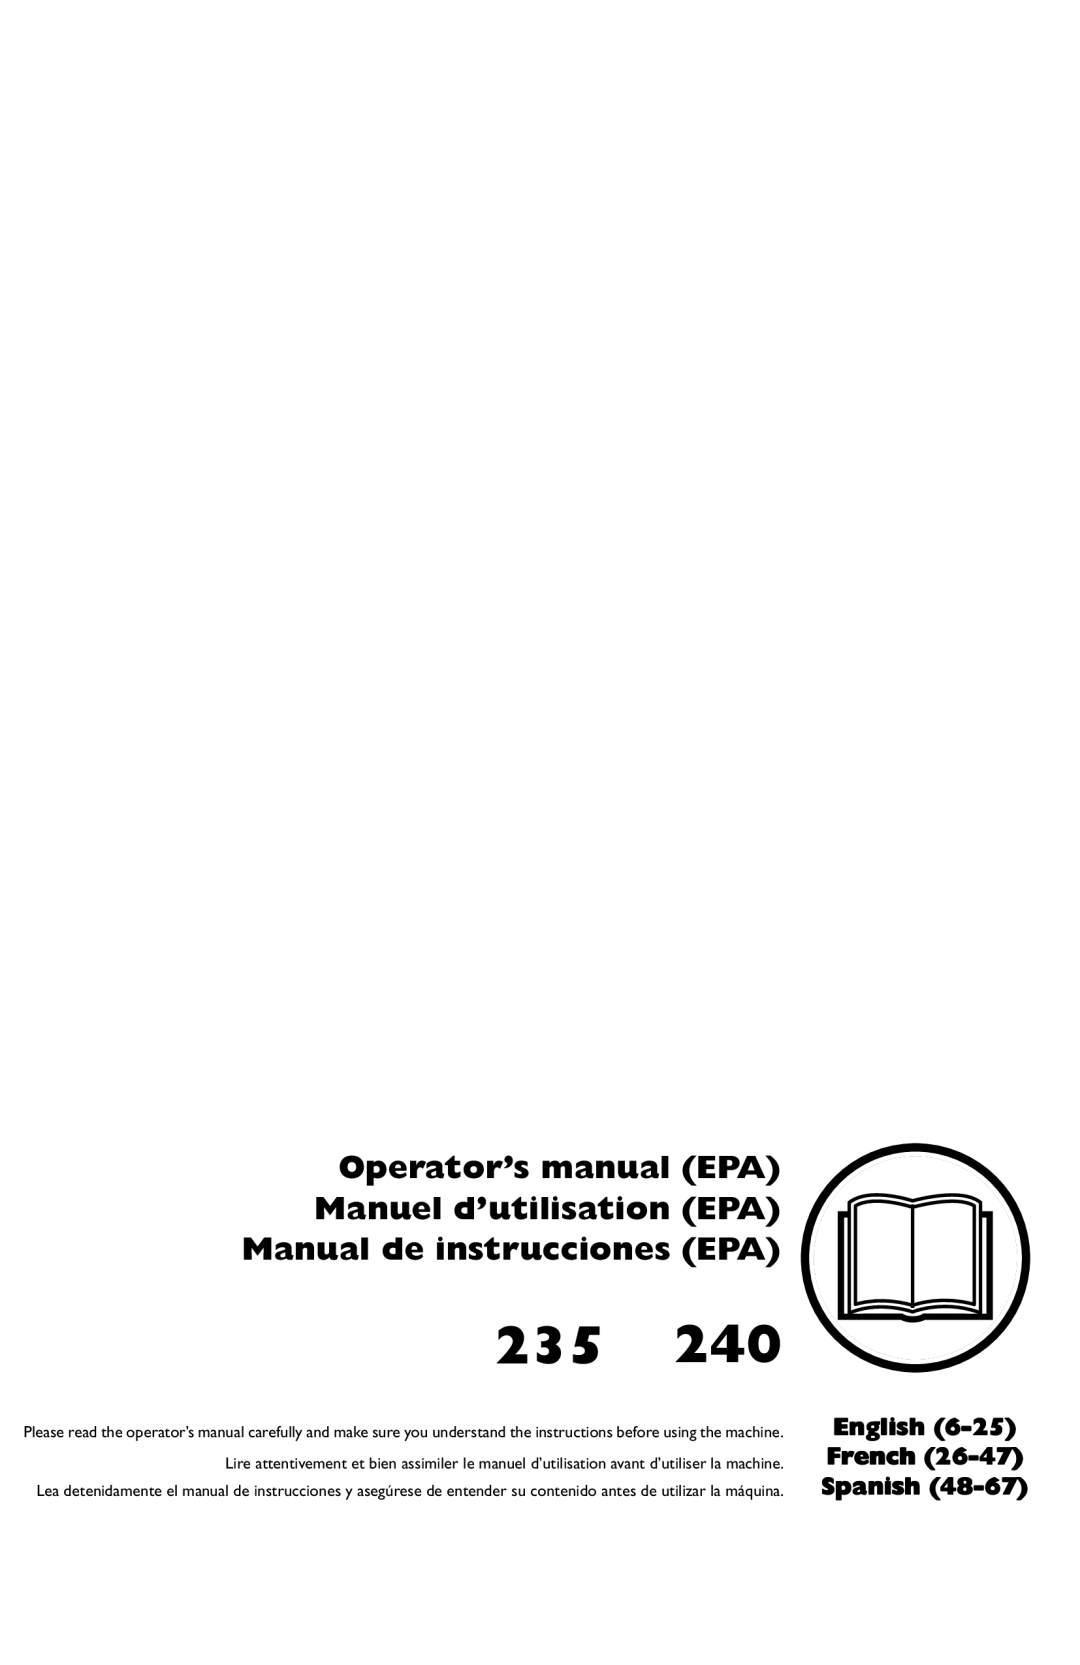 Husqvarna 235, 240 manuel dutilisation Operator’s manual EPA Manuel d’utilisation EPA, Manual de instrucciones EPA 